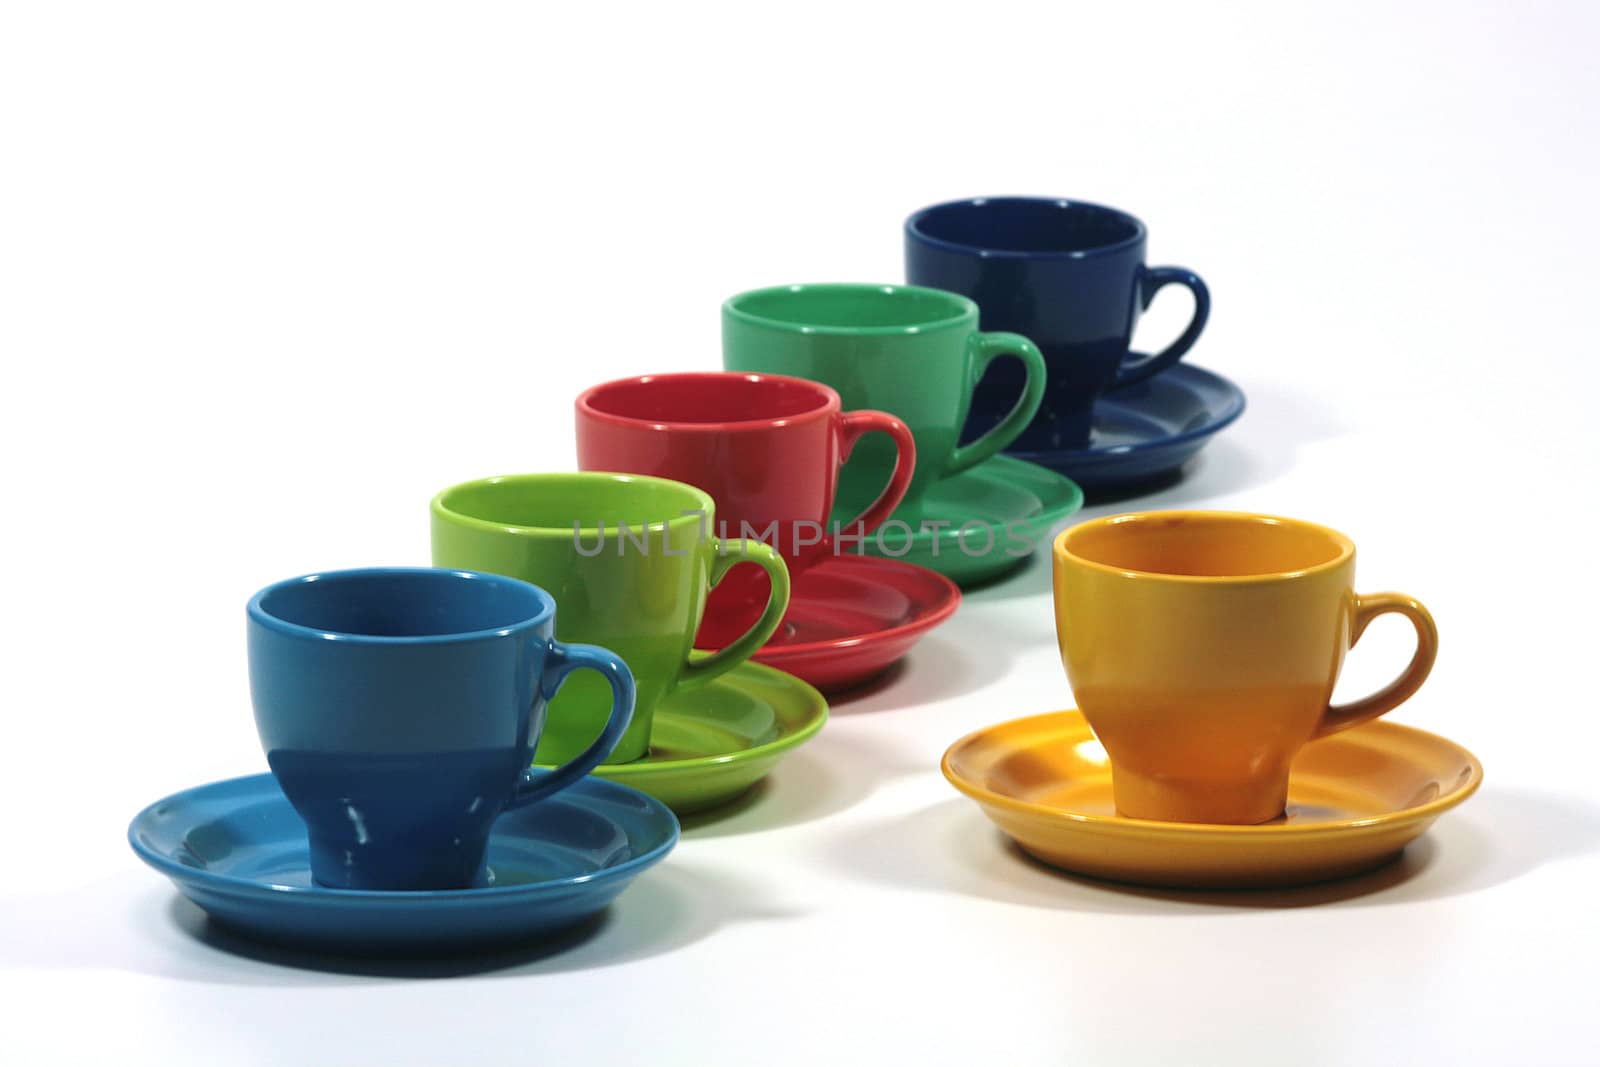 Color tea cups - photos for designers